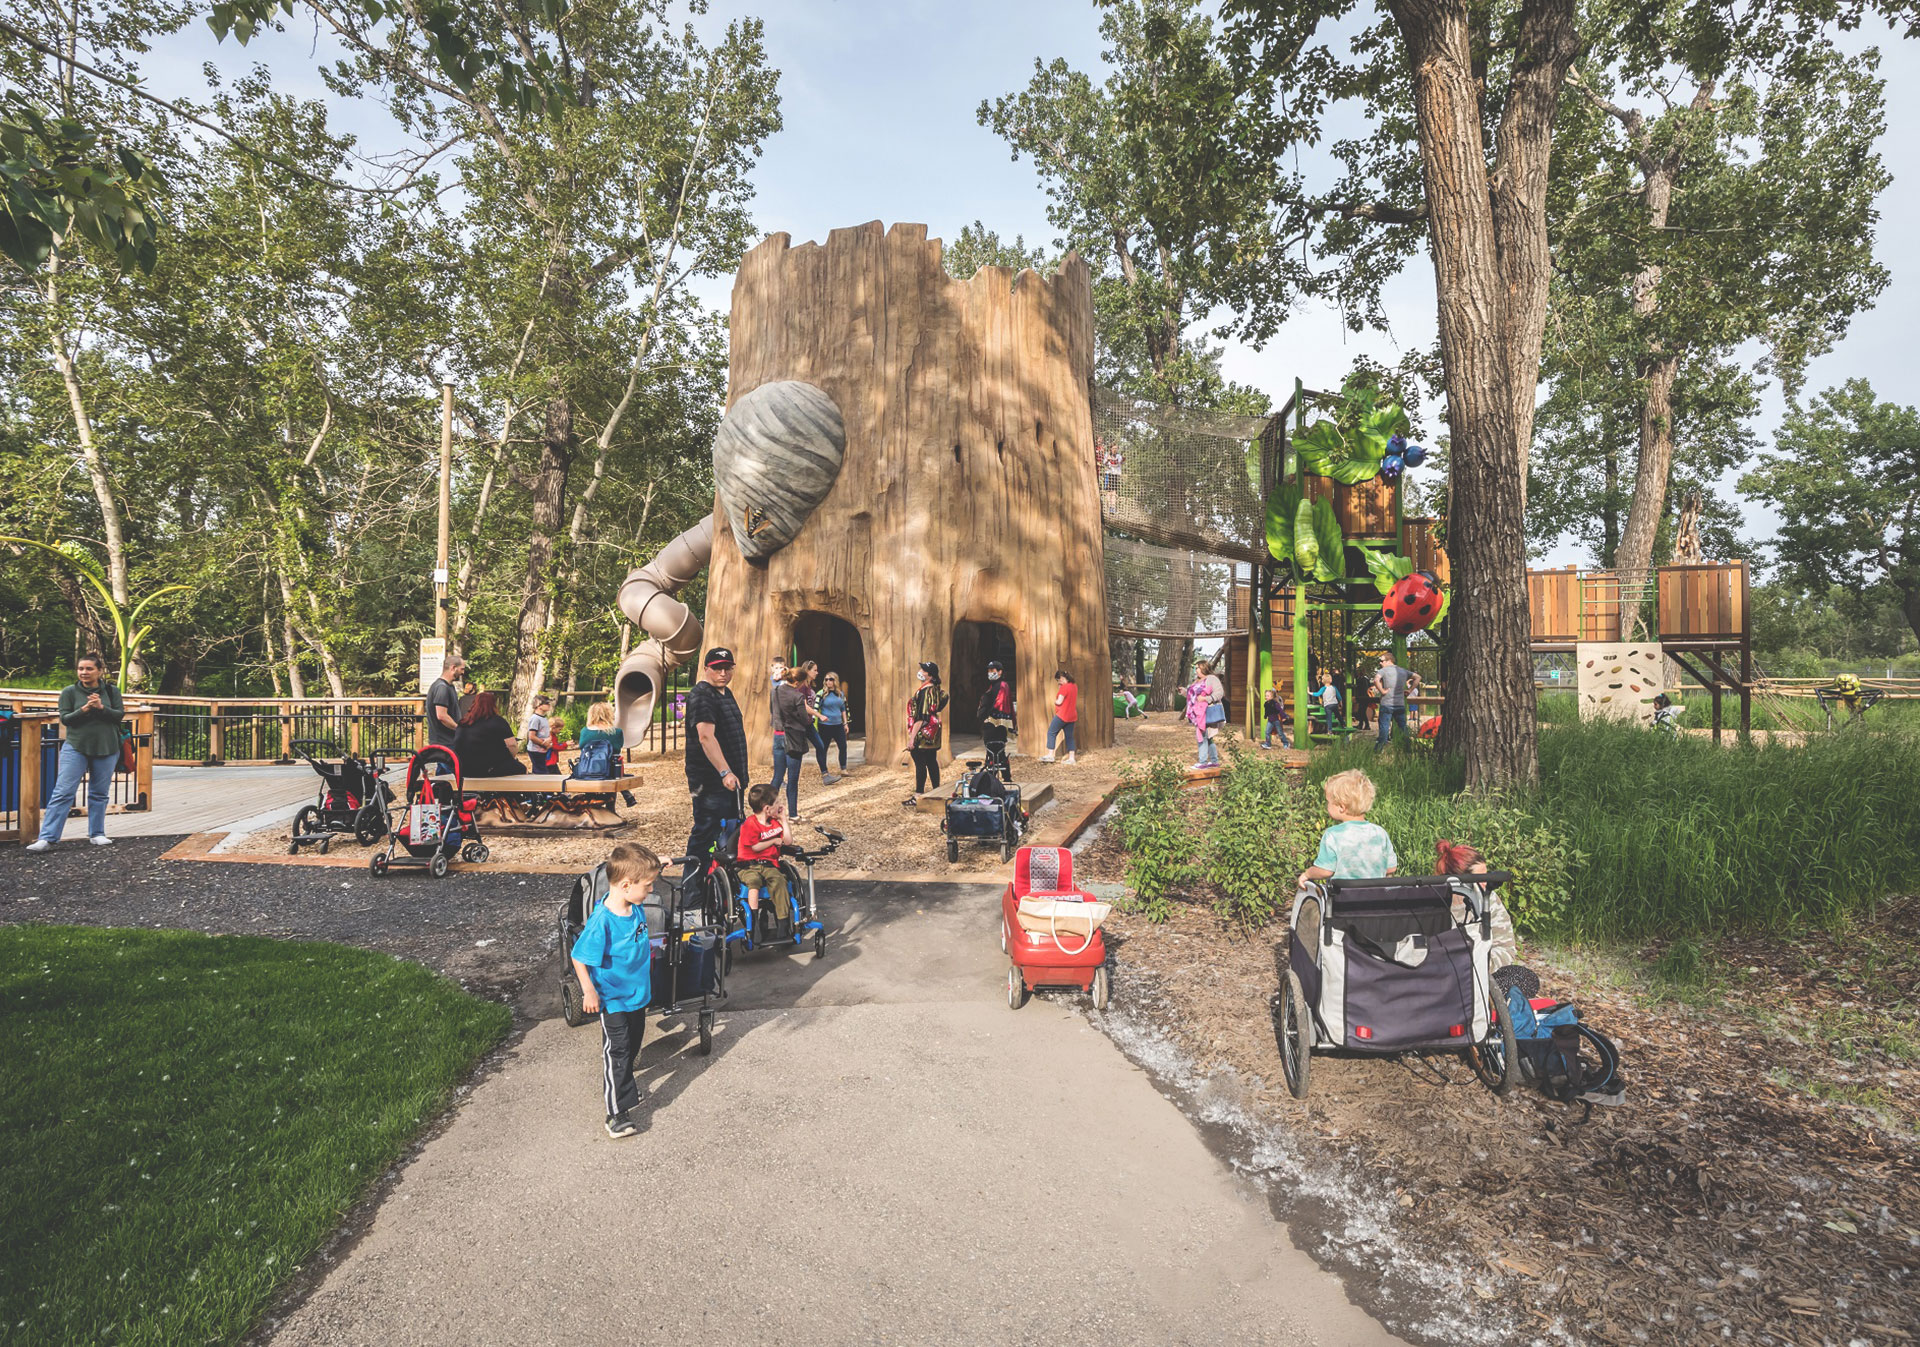 Playgrounds at the Wilder Institute/Calgary Zoo